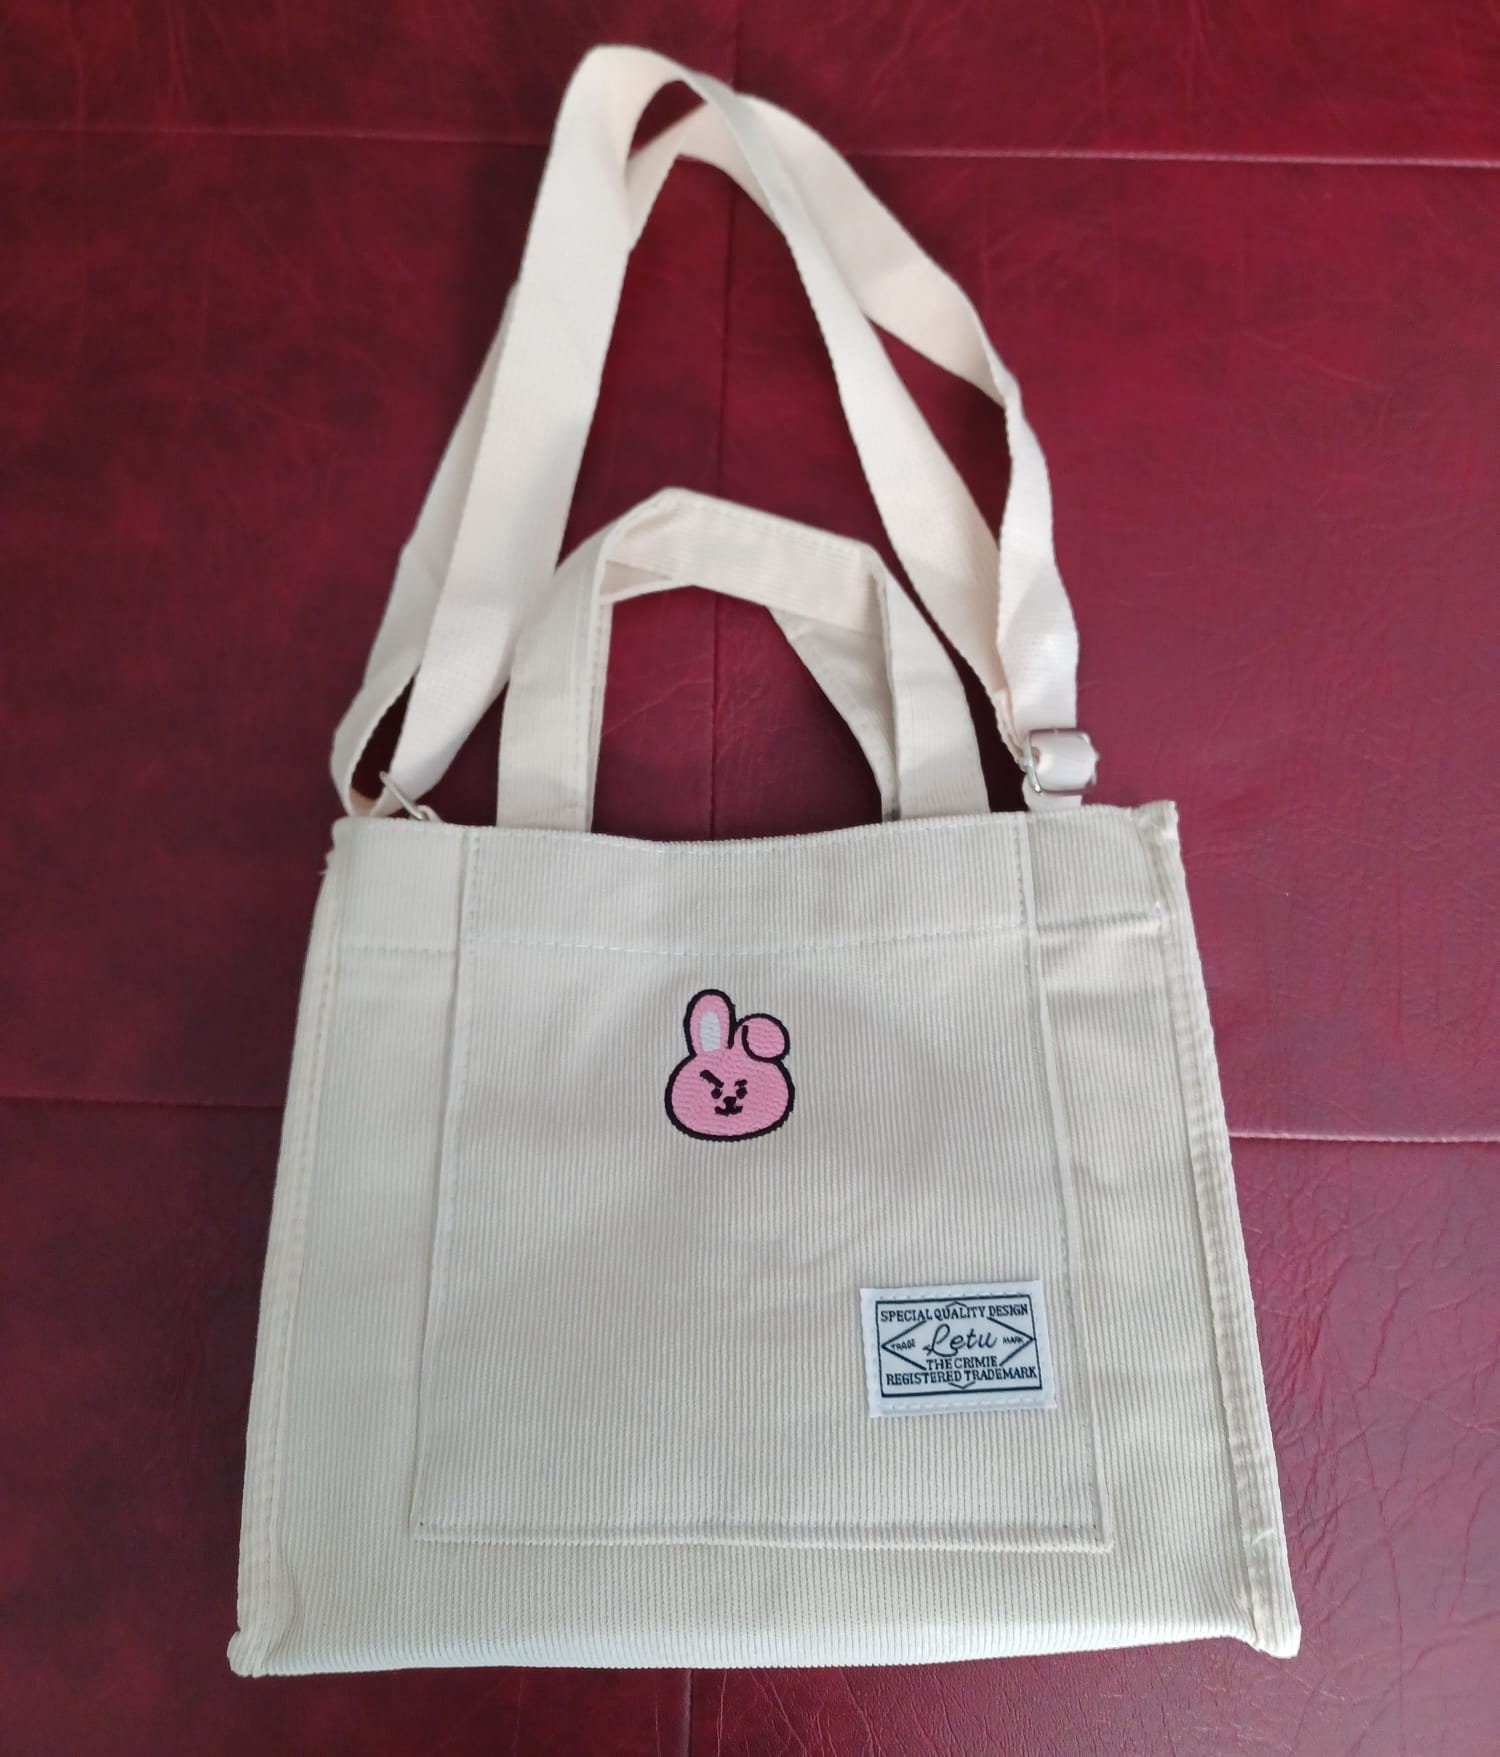 Durable BTS Kpop Lunch Box Pink Reusable Lunch Bag Algeria